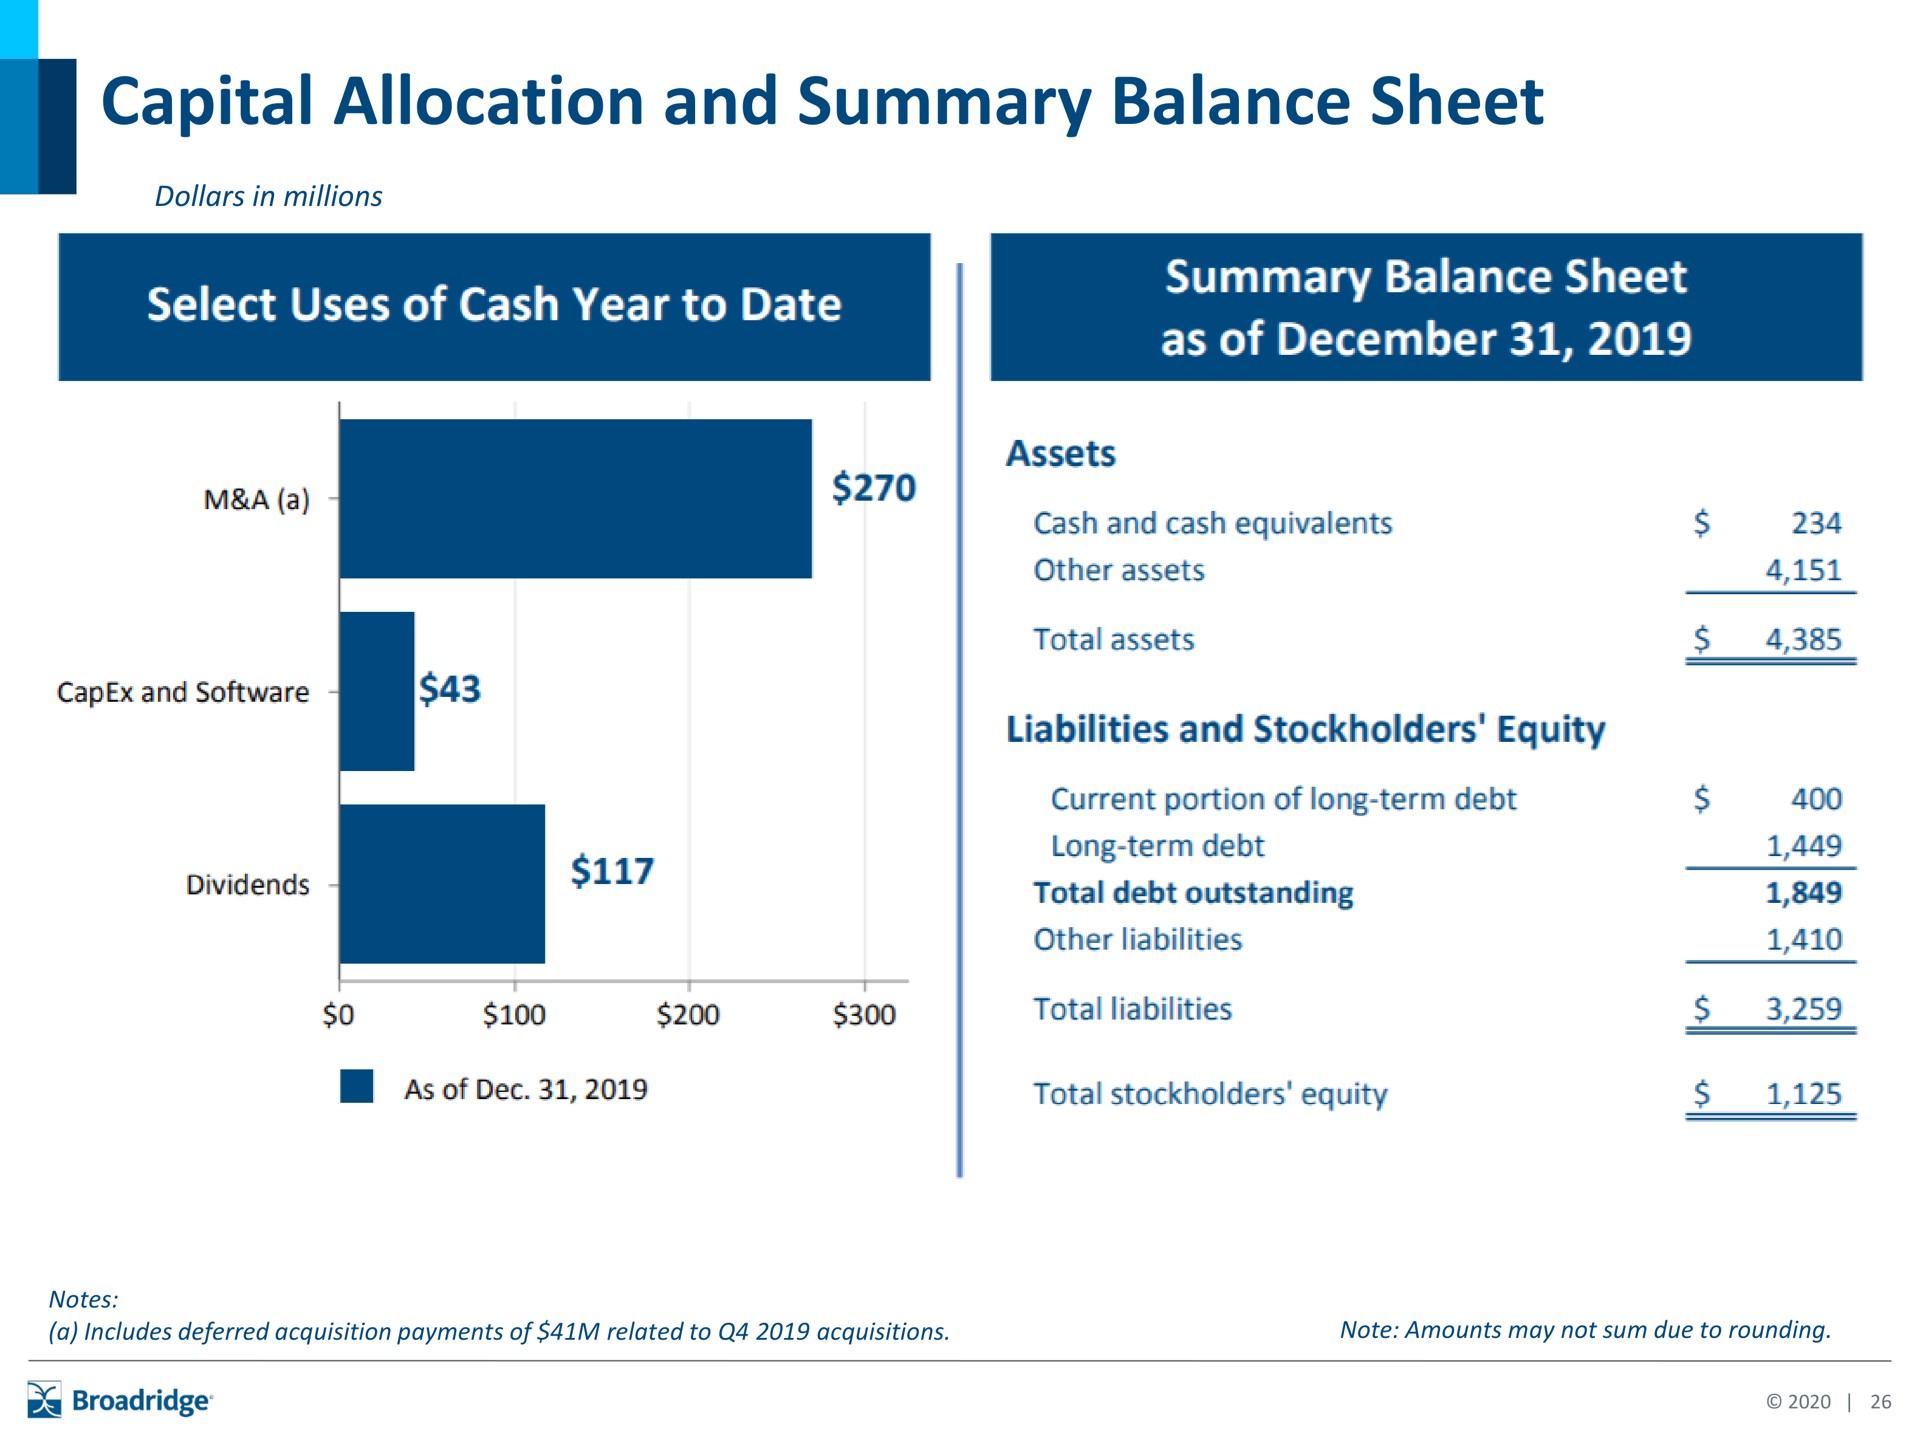 capital allocation and summary balance sheet | Broadridge Financial Solutions